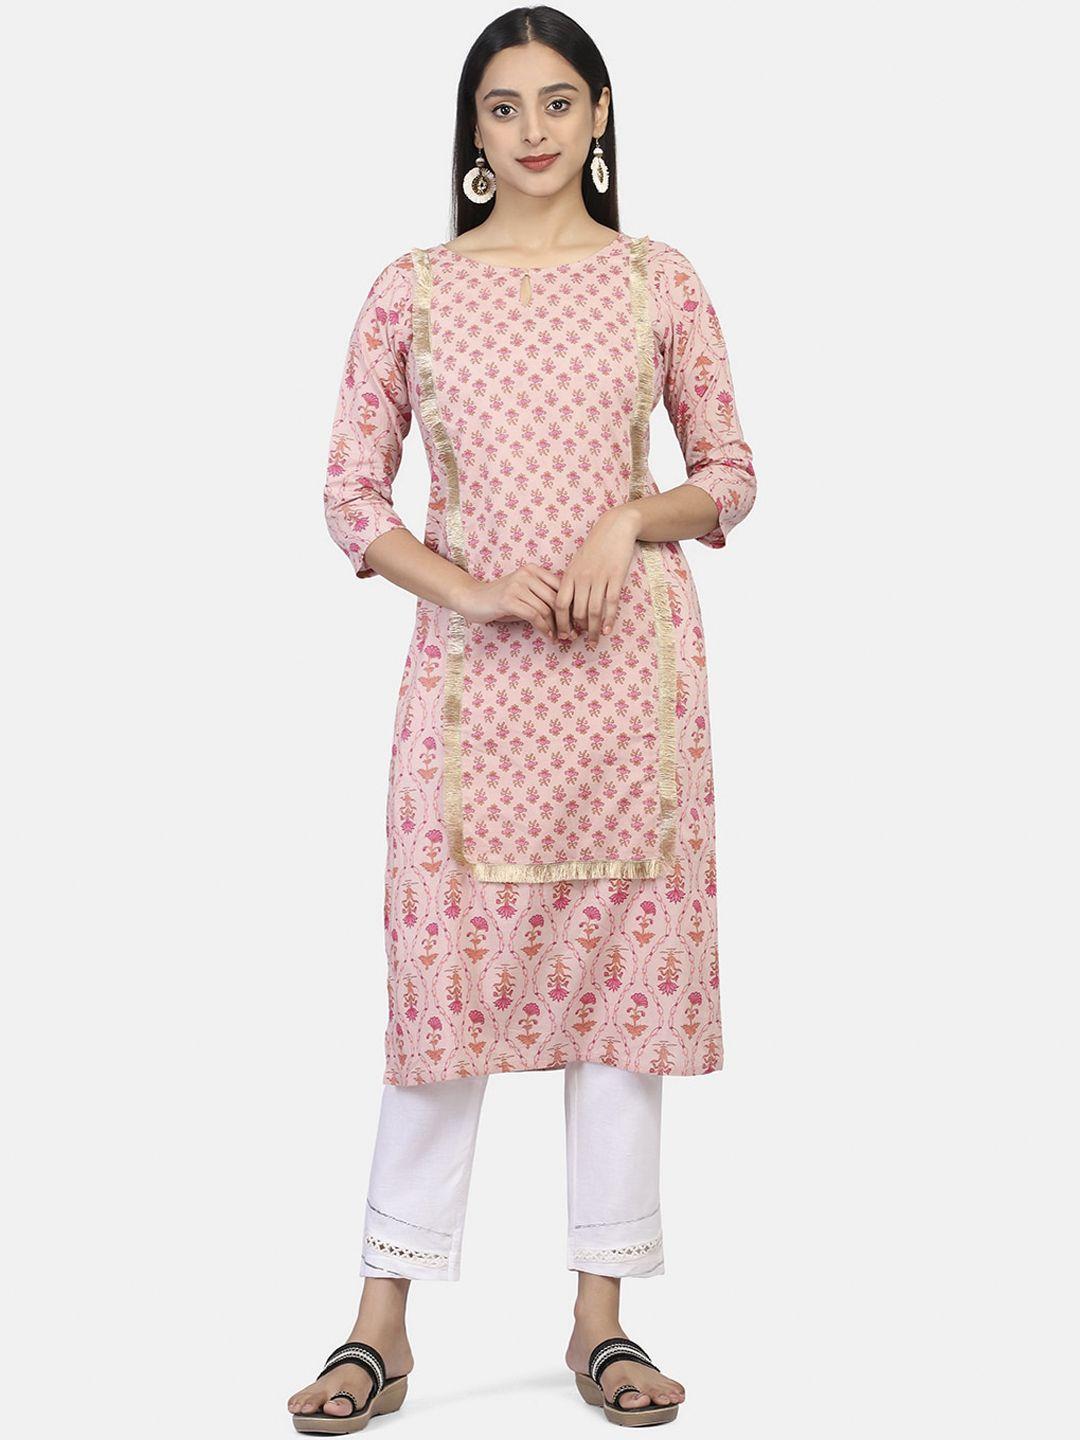 mirraw women pink ethnic motifs printed keyhole neck kurta with lace details